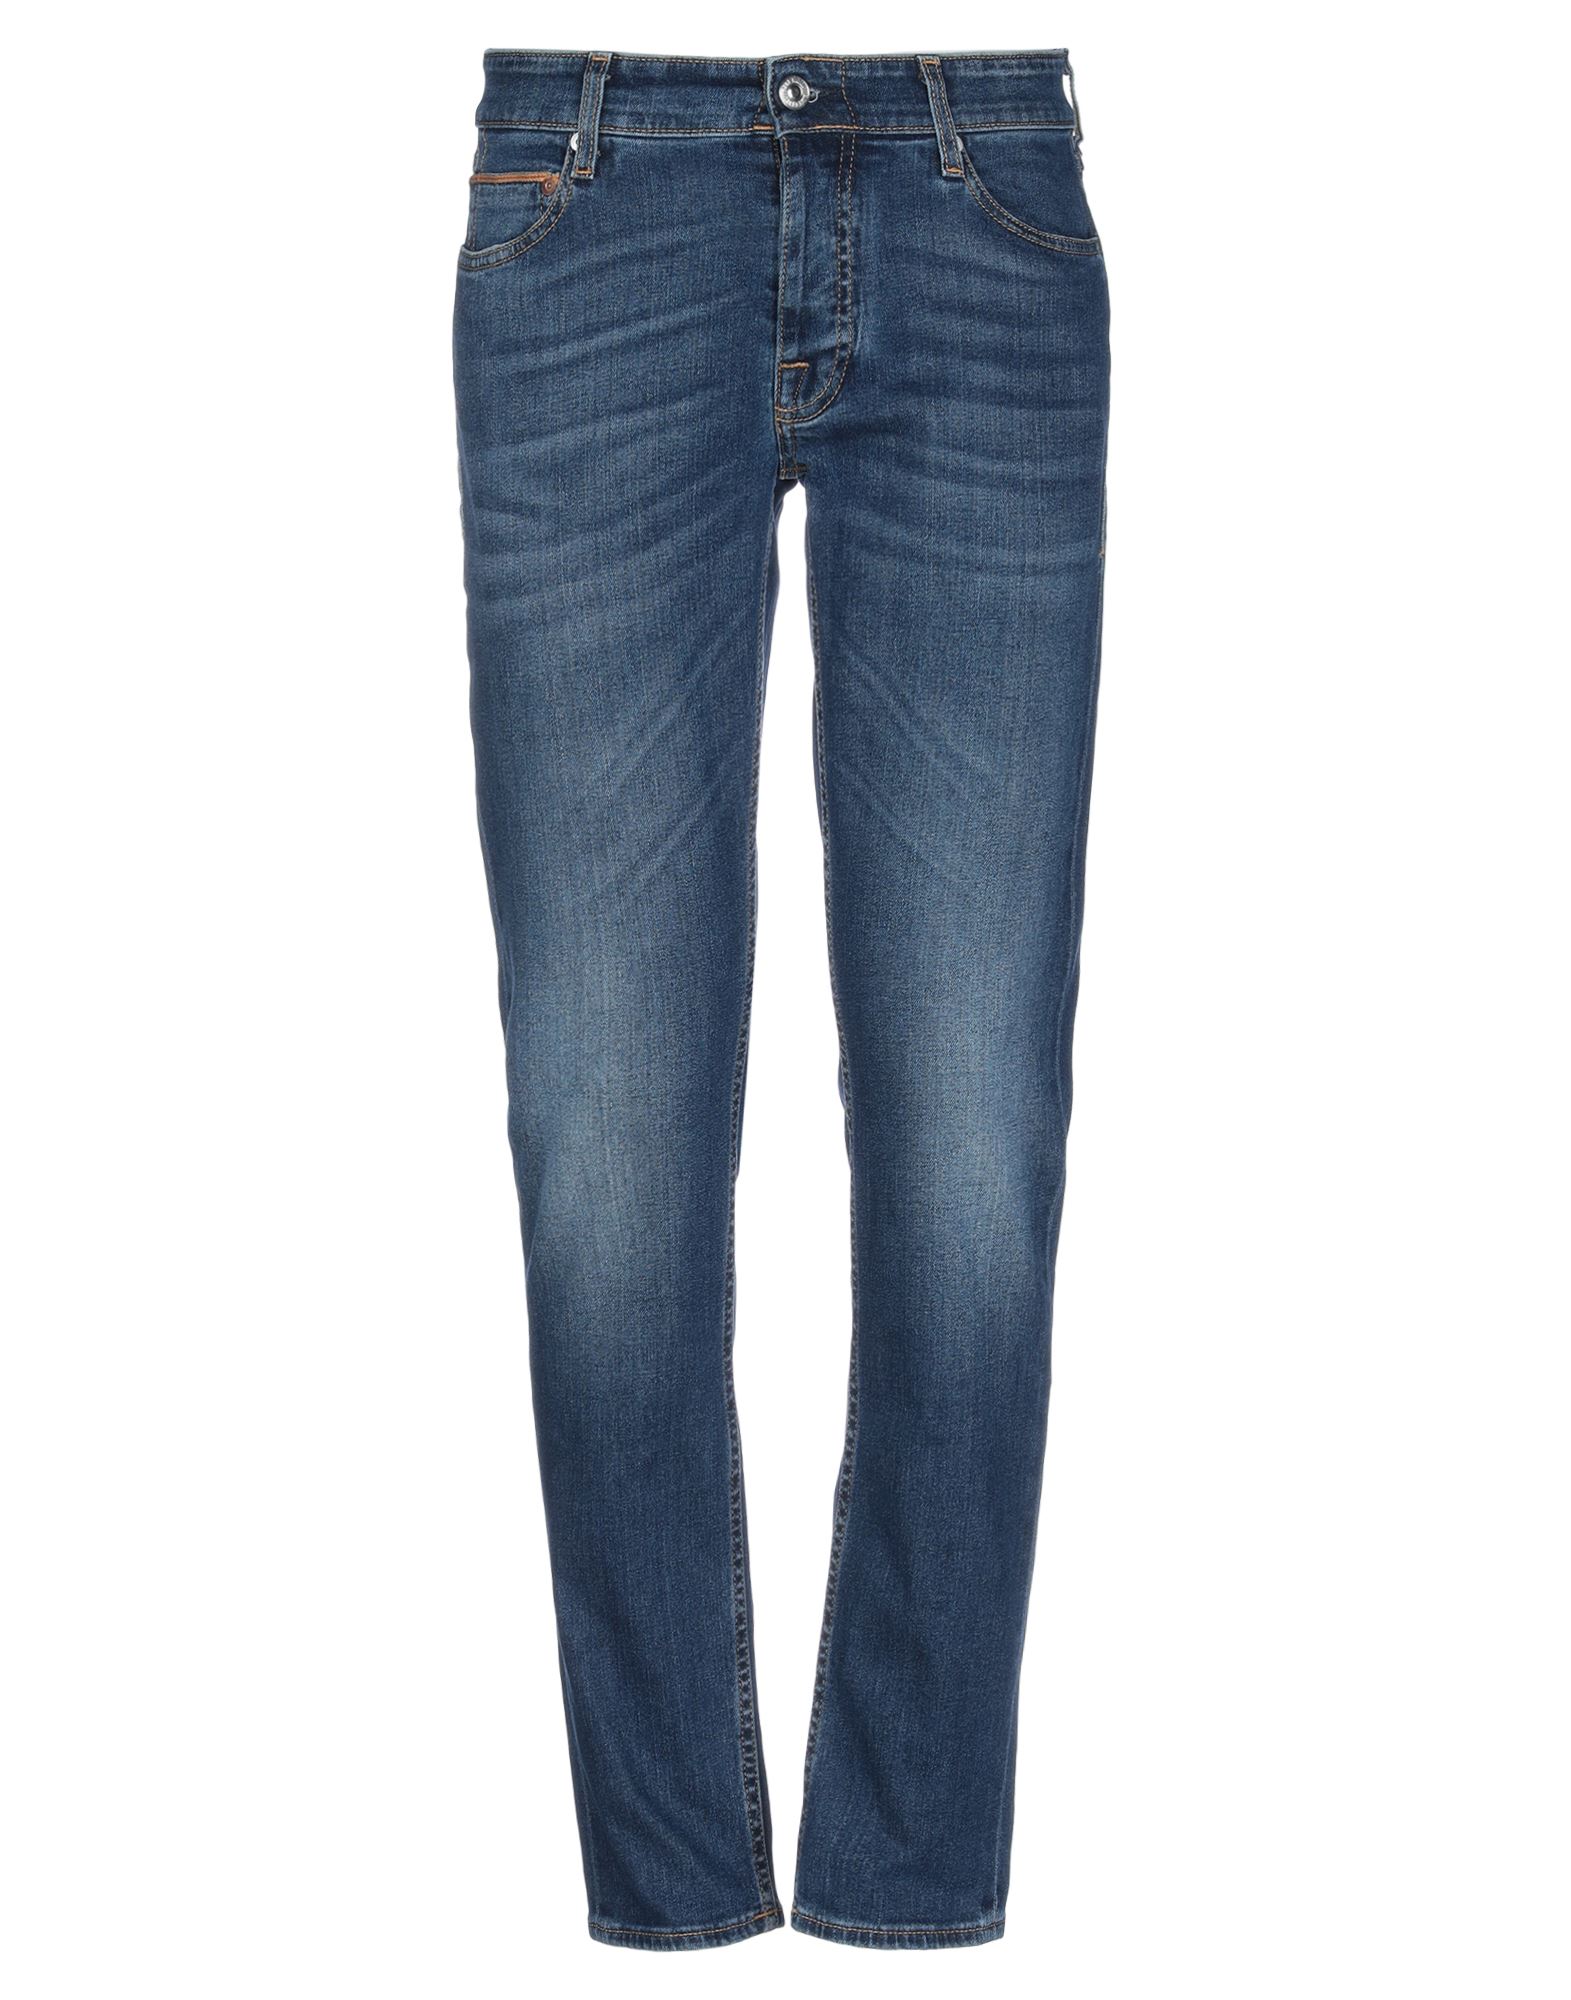 CARE LABEL Jeans | Smart Closet